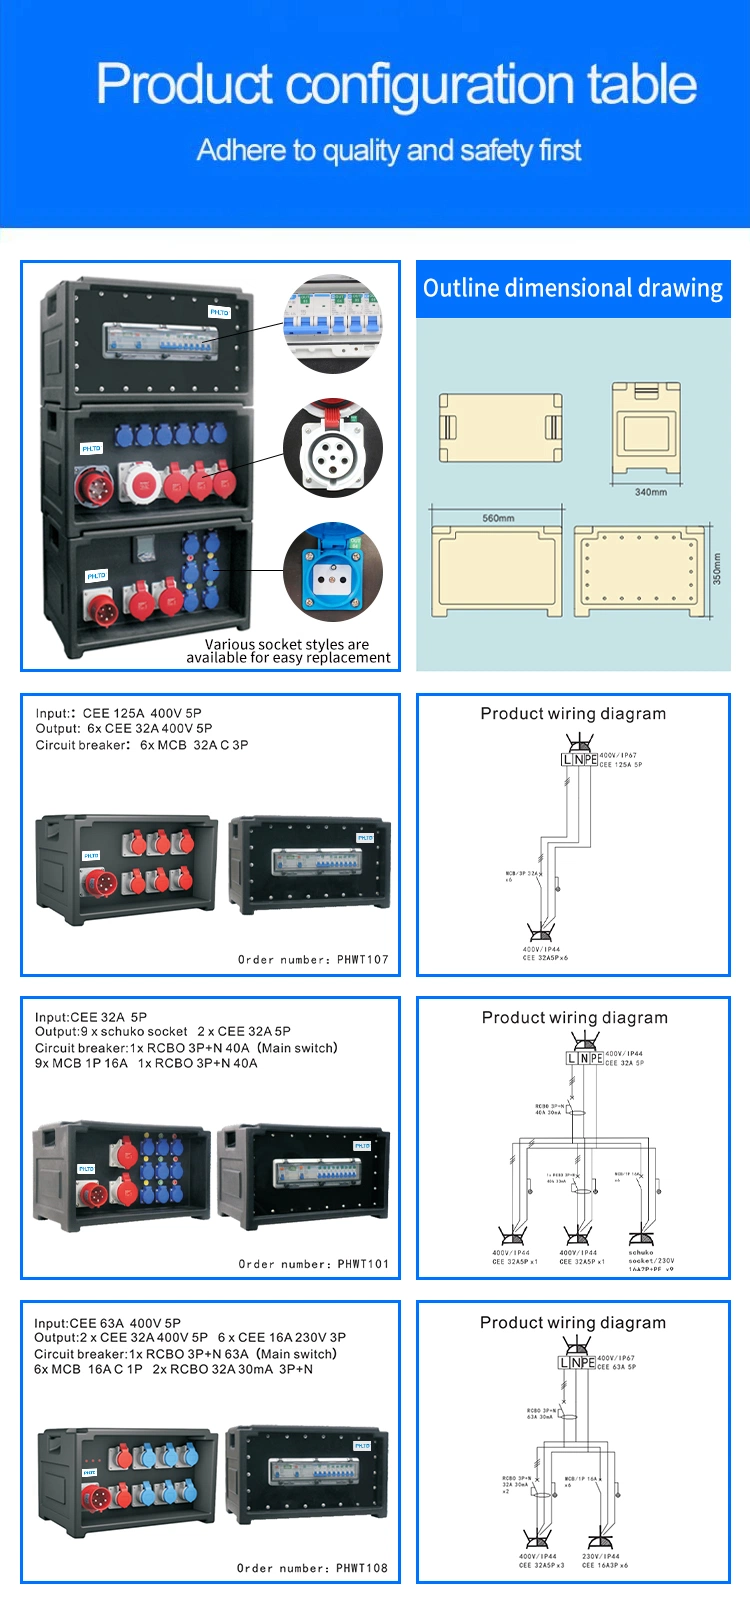 Phltd Waterproof Circuit Breaker Distribution Socket Plastic Enclosure Industrial Use Powertable Distribution Board